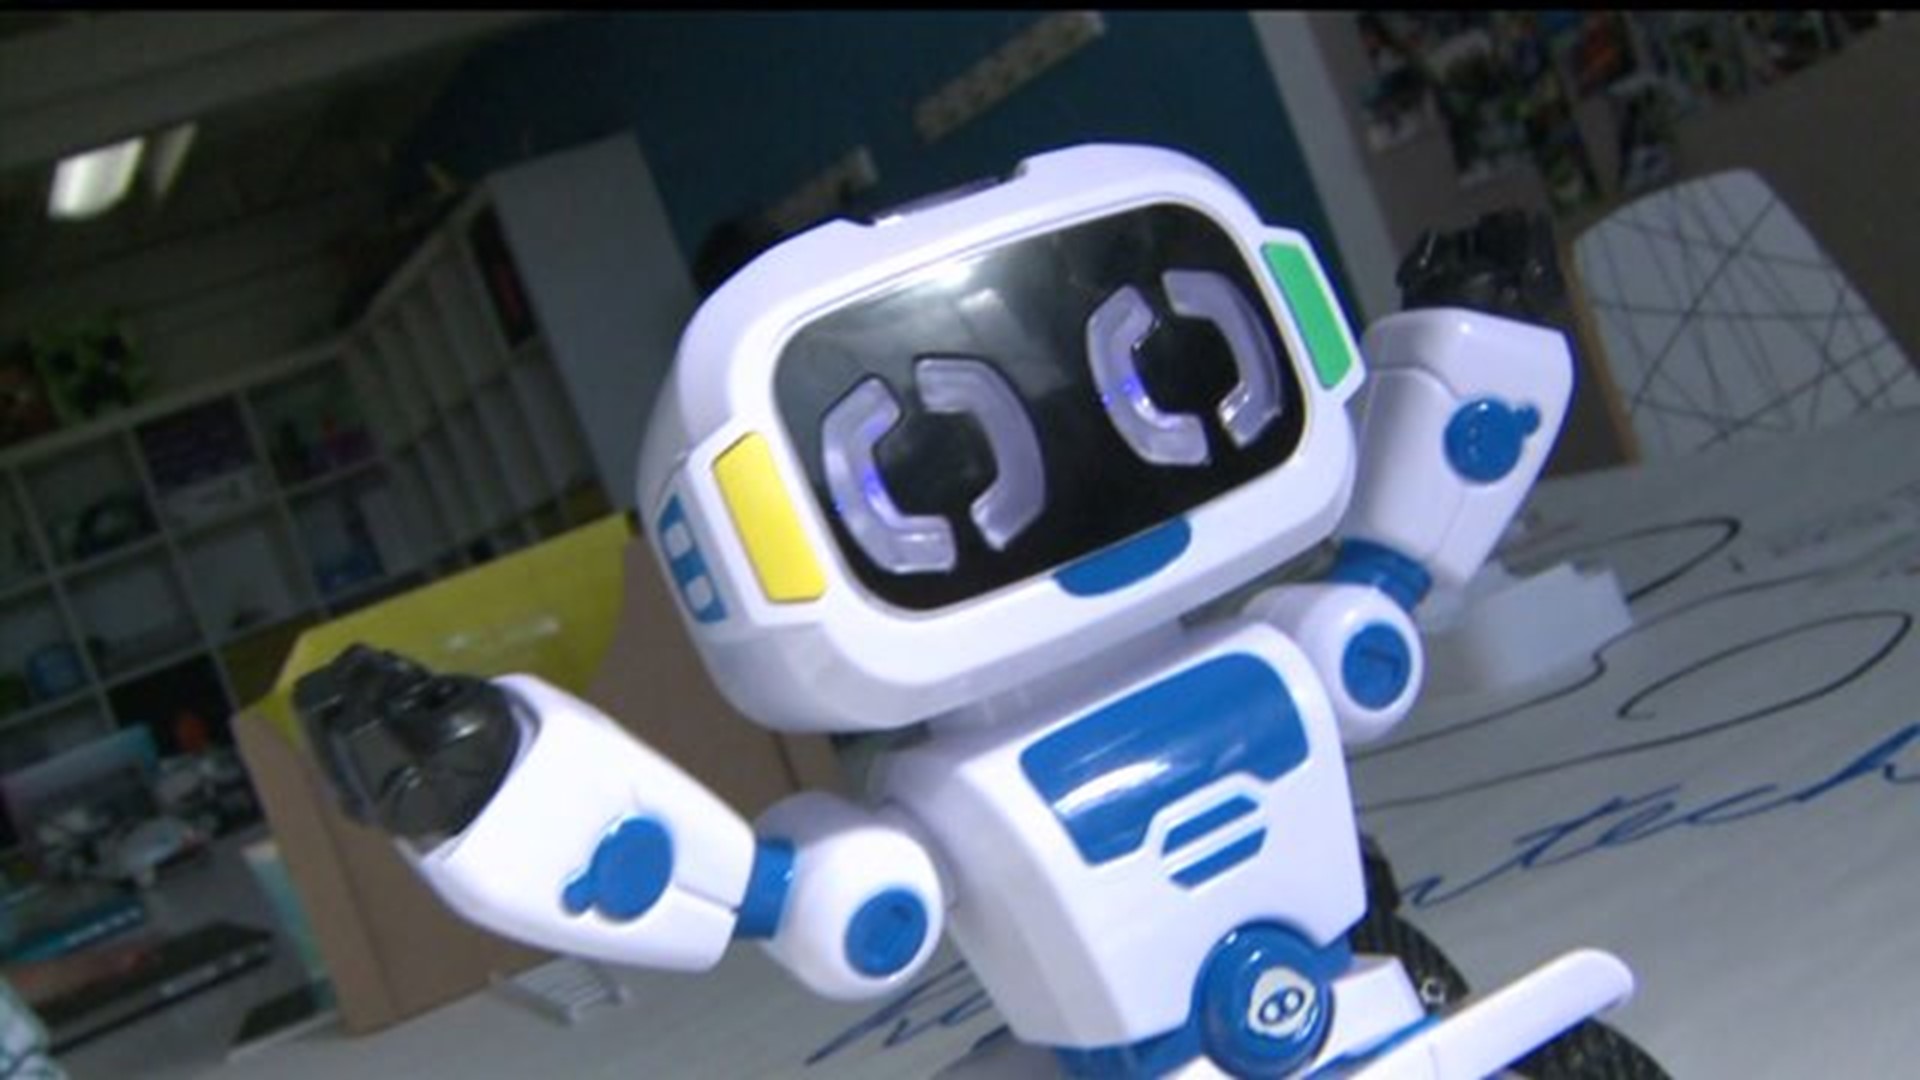 Tech Report: Tech toys for kids